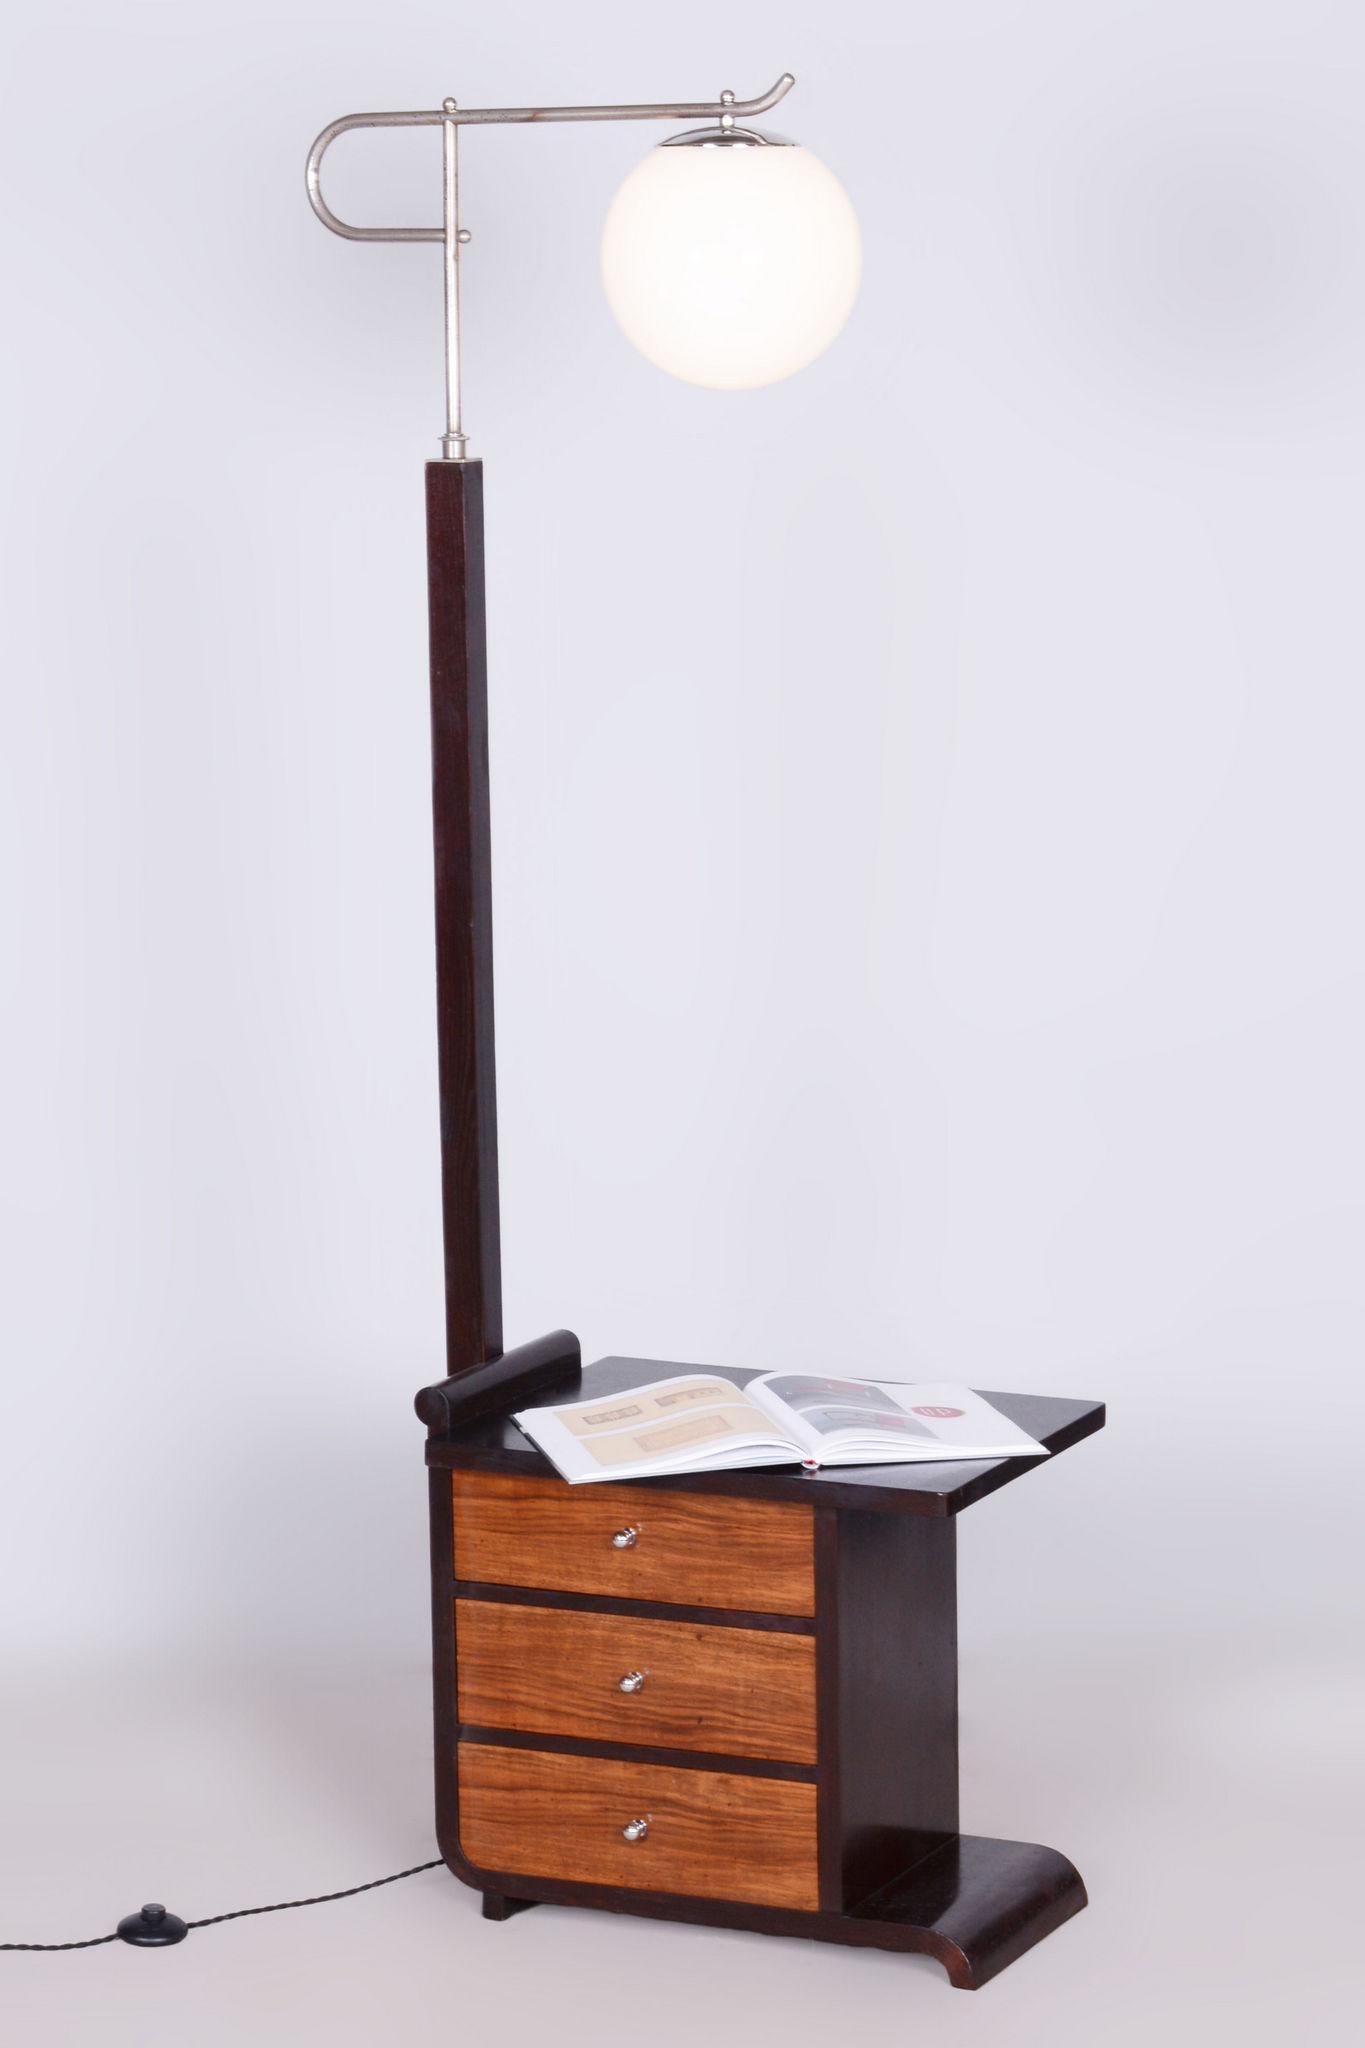 Restored ArtDeco Floor Lamp, J. Halabala, Walnut, Chrome, Glass, Czechia, 1930s For Sale 5